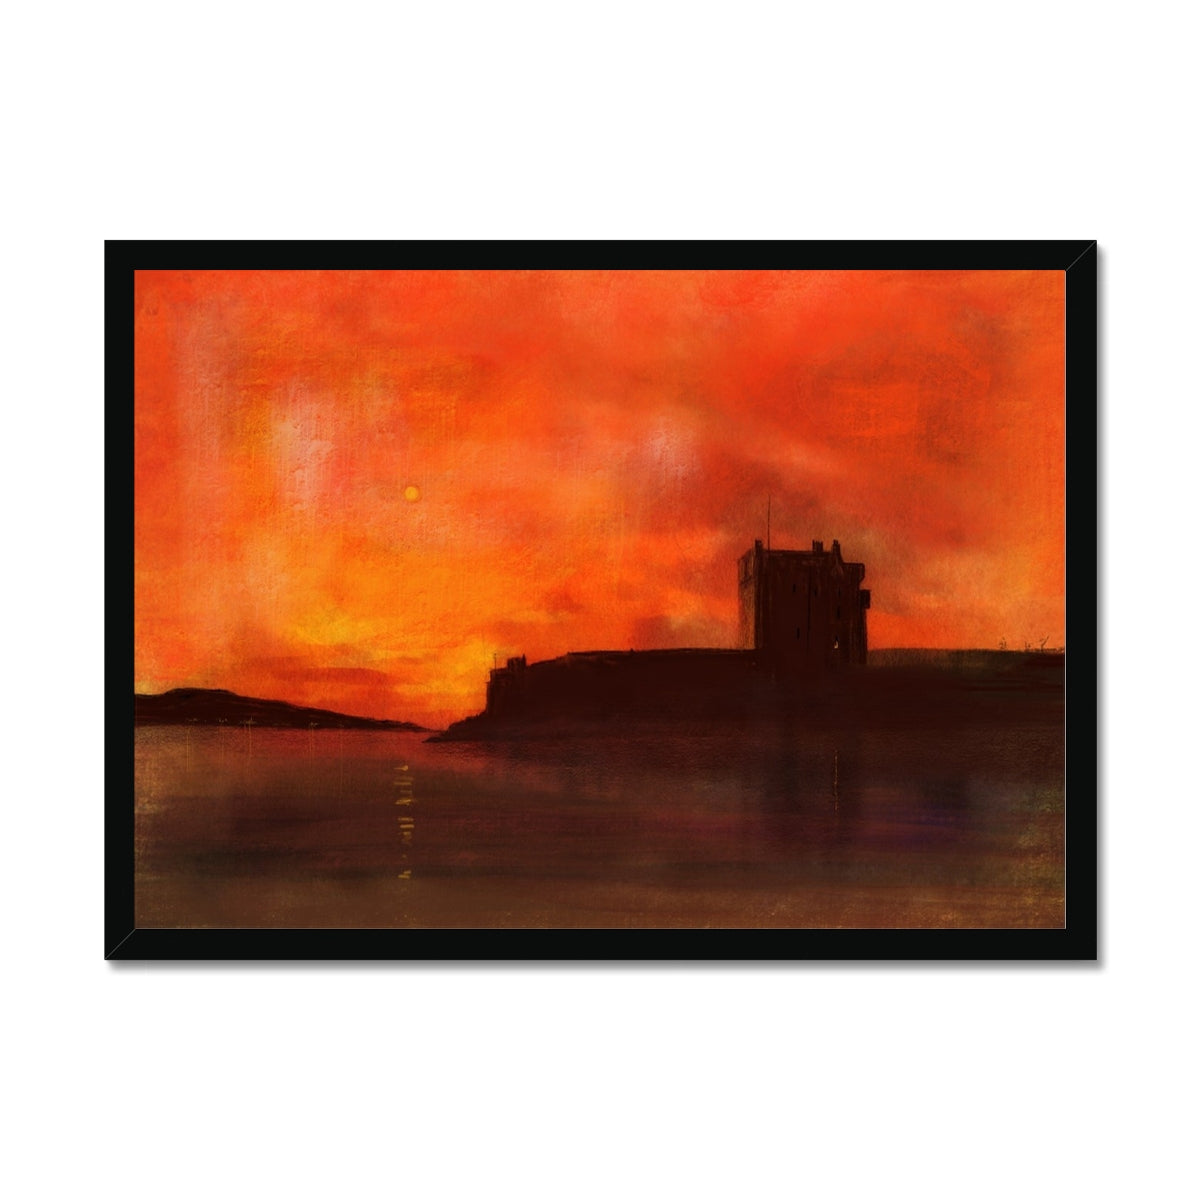 Broughty Castle Sunset Painting | Framed Prints From Scotland-Framed Prints-Historic & Iconic Scotland Art Gallery-A2 Landscape-Black Frame-Paintings, Prints, Homeware, Art Gifts From Scotland By Scottish Artist Kevin Hunter